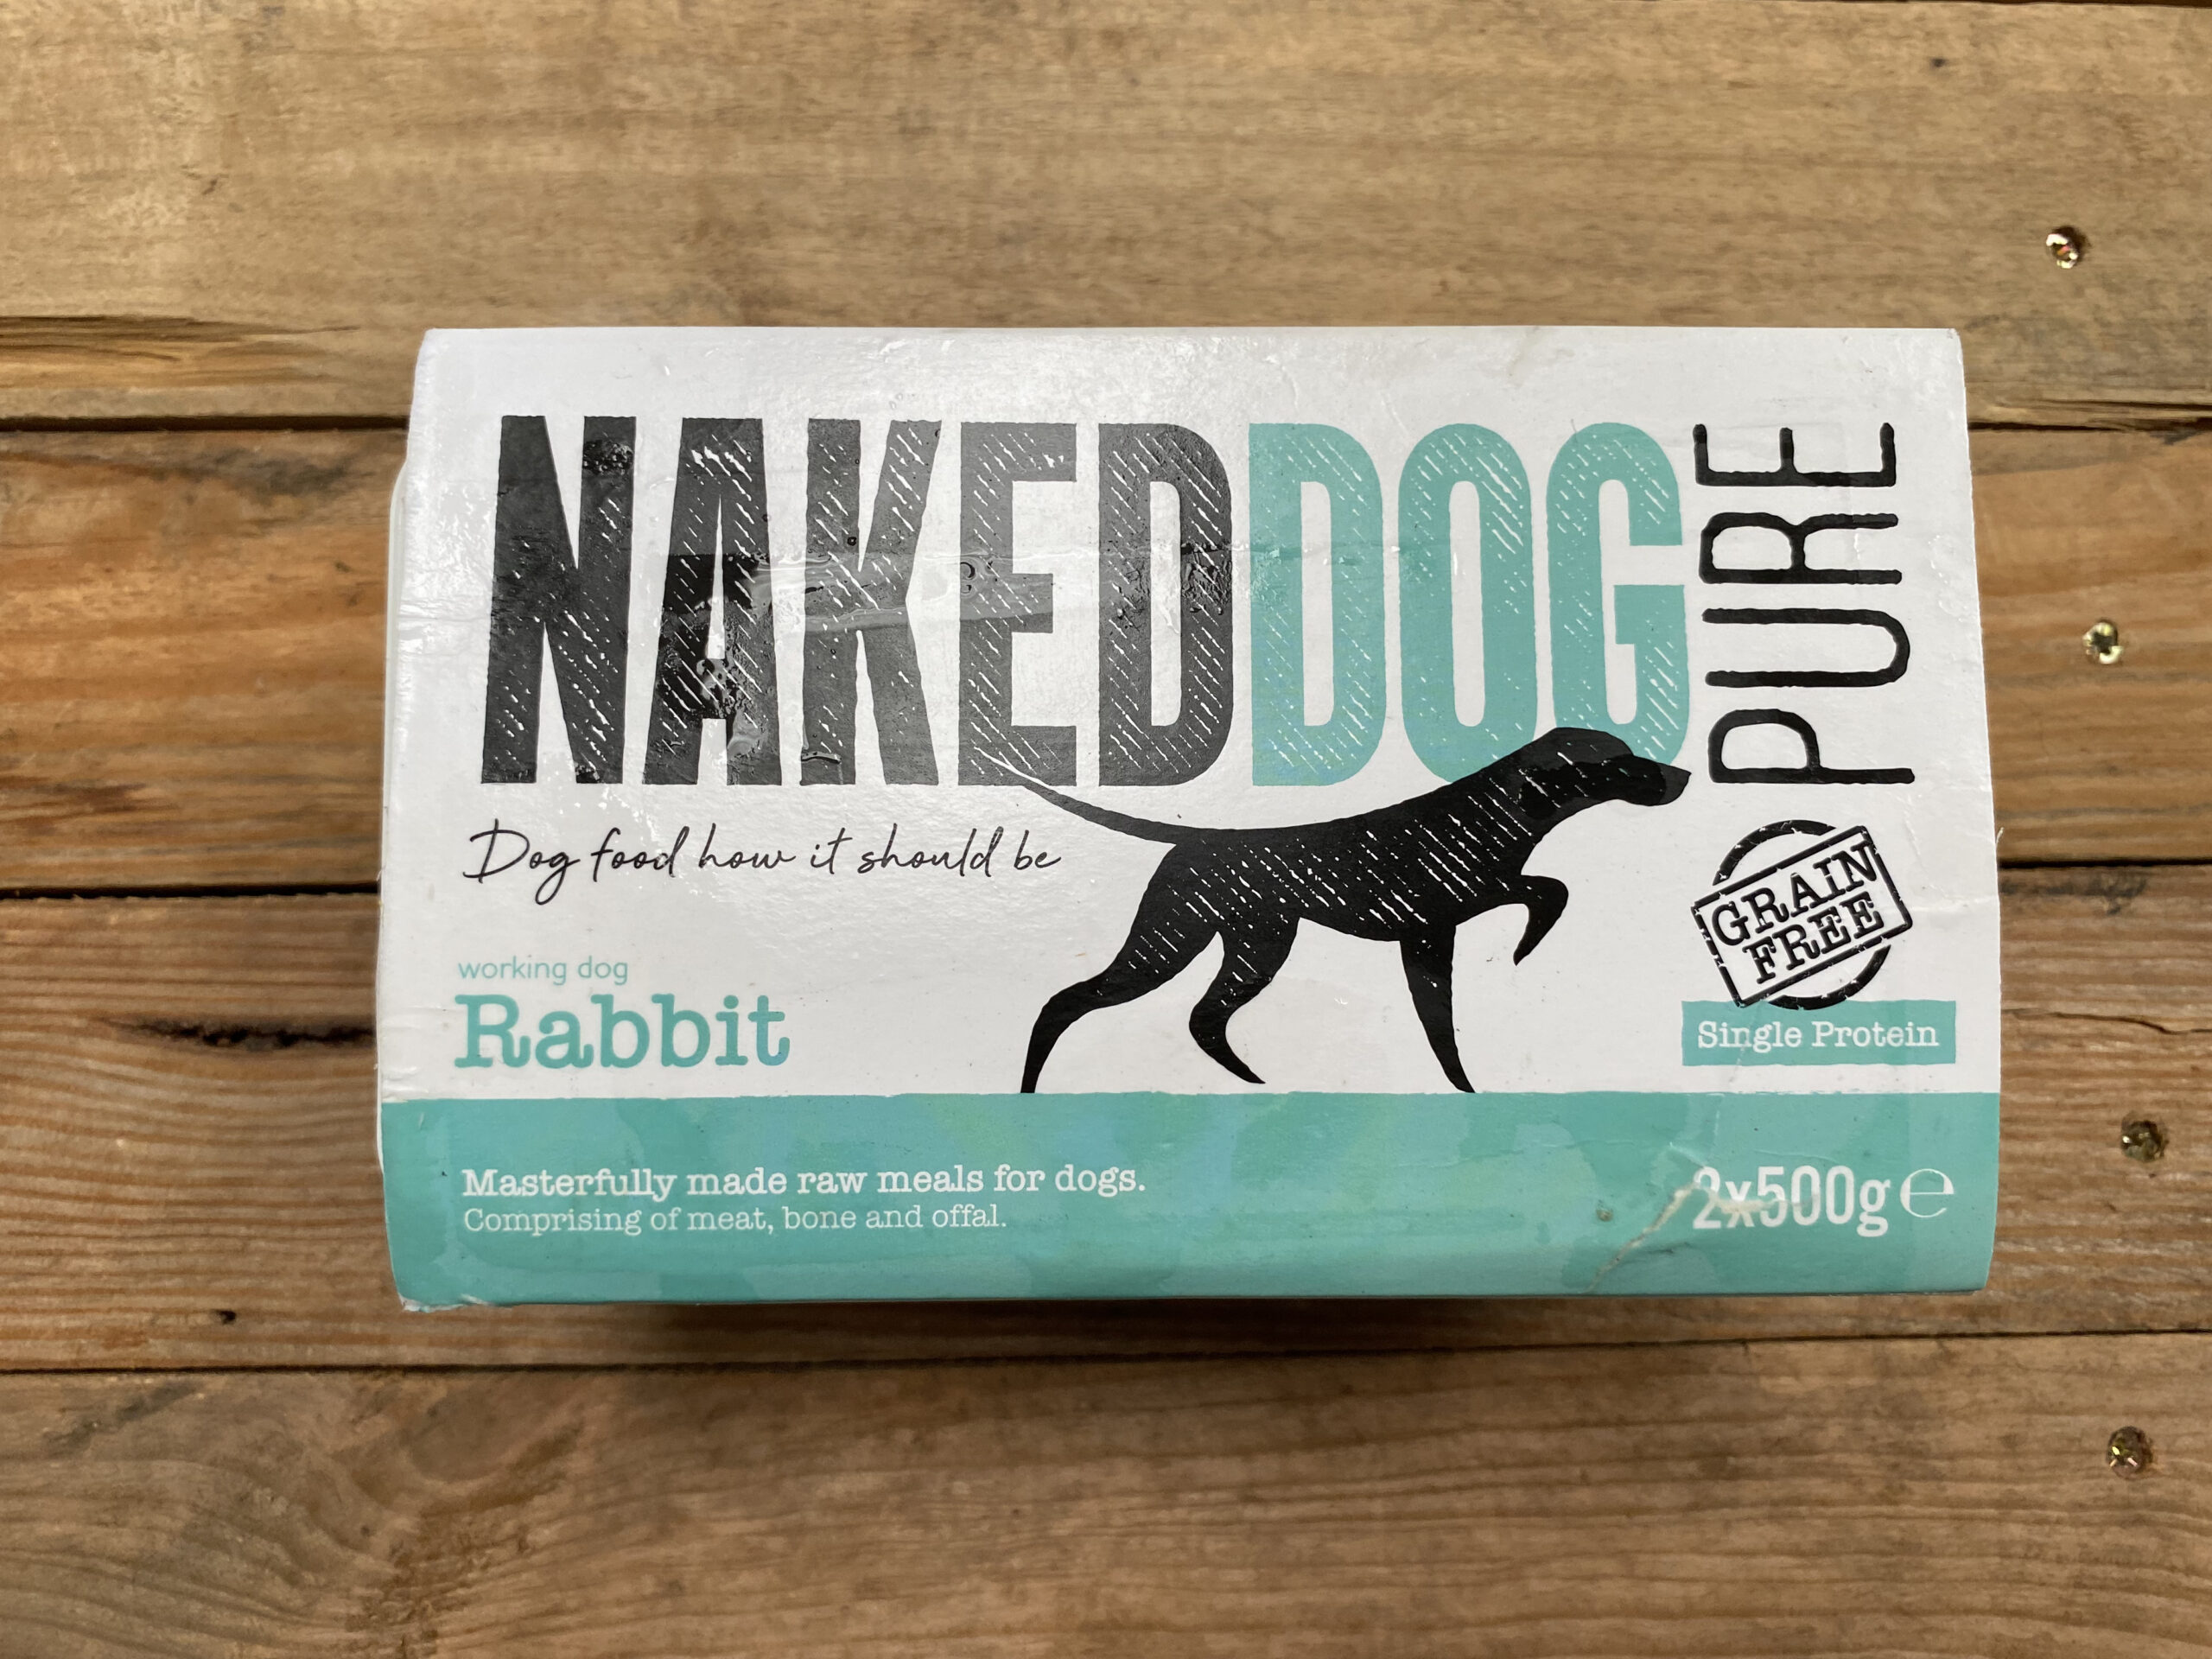 Naked Dog Pure Rabbit – 2x500g